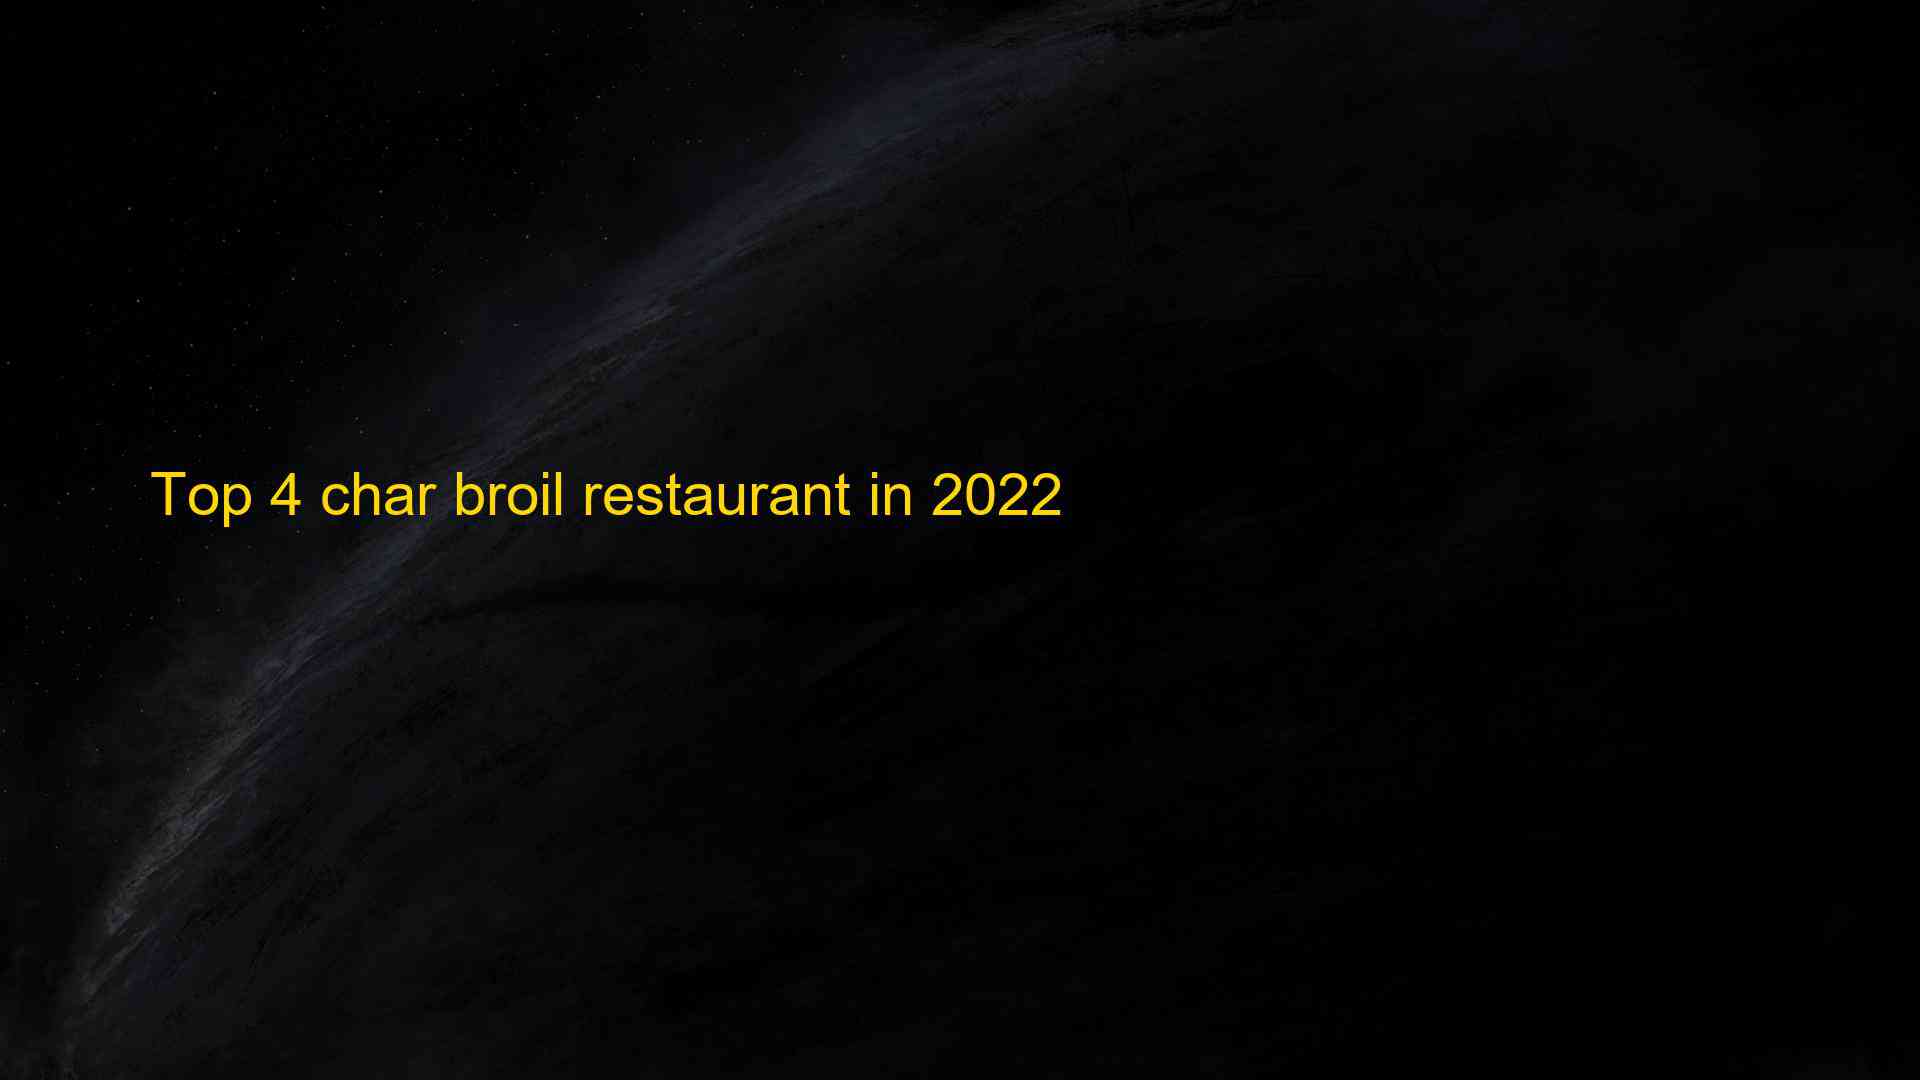 Top 4 char broil restaurant in 2022 1662997935